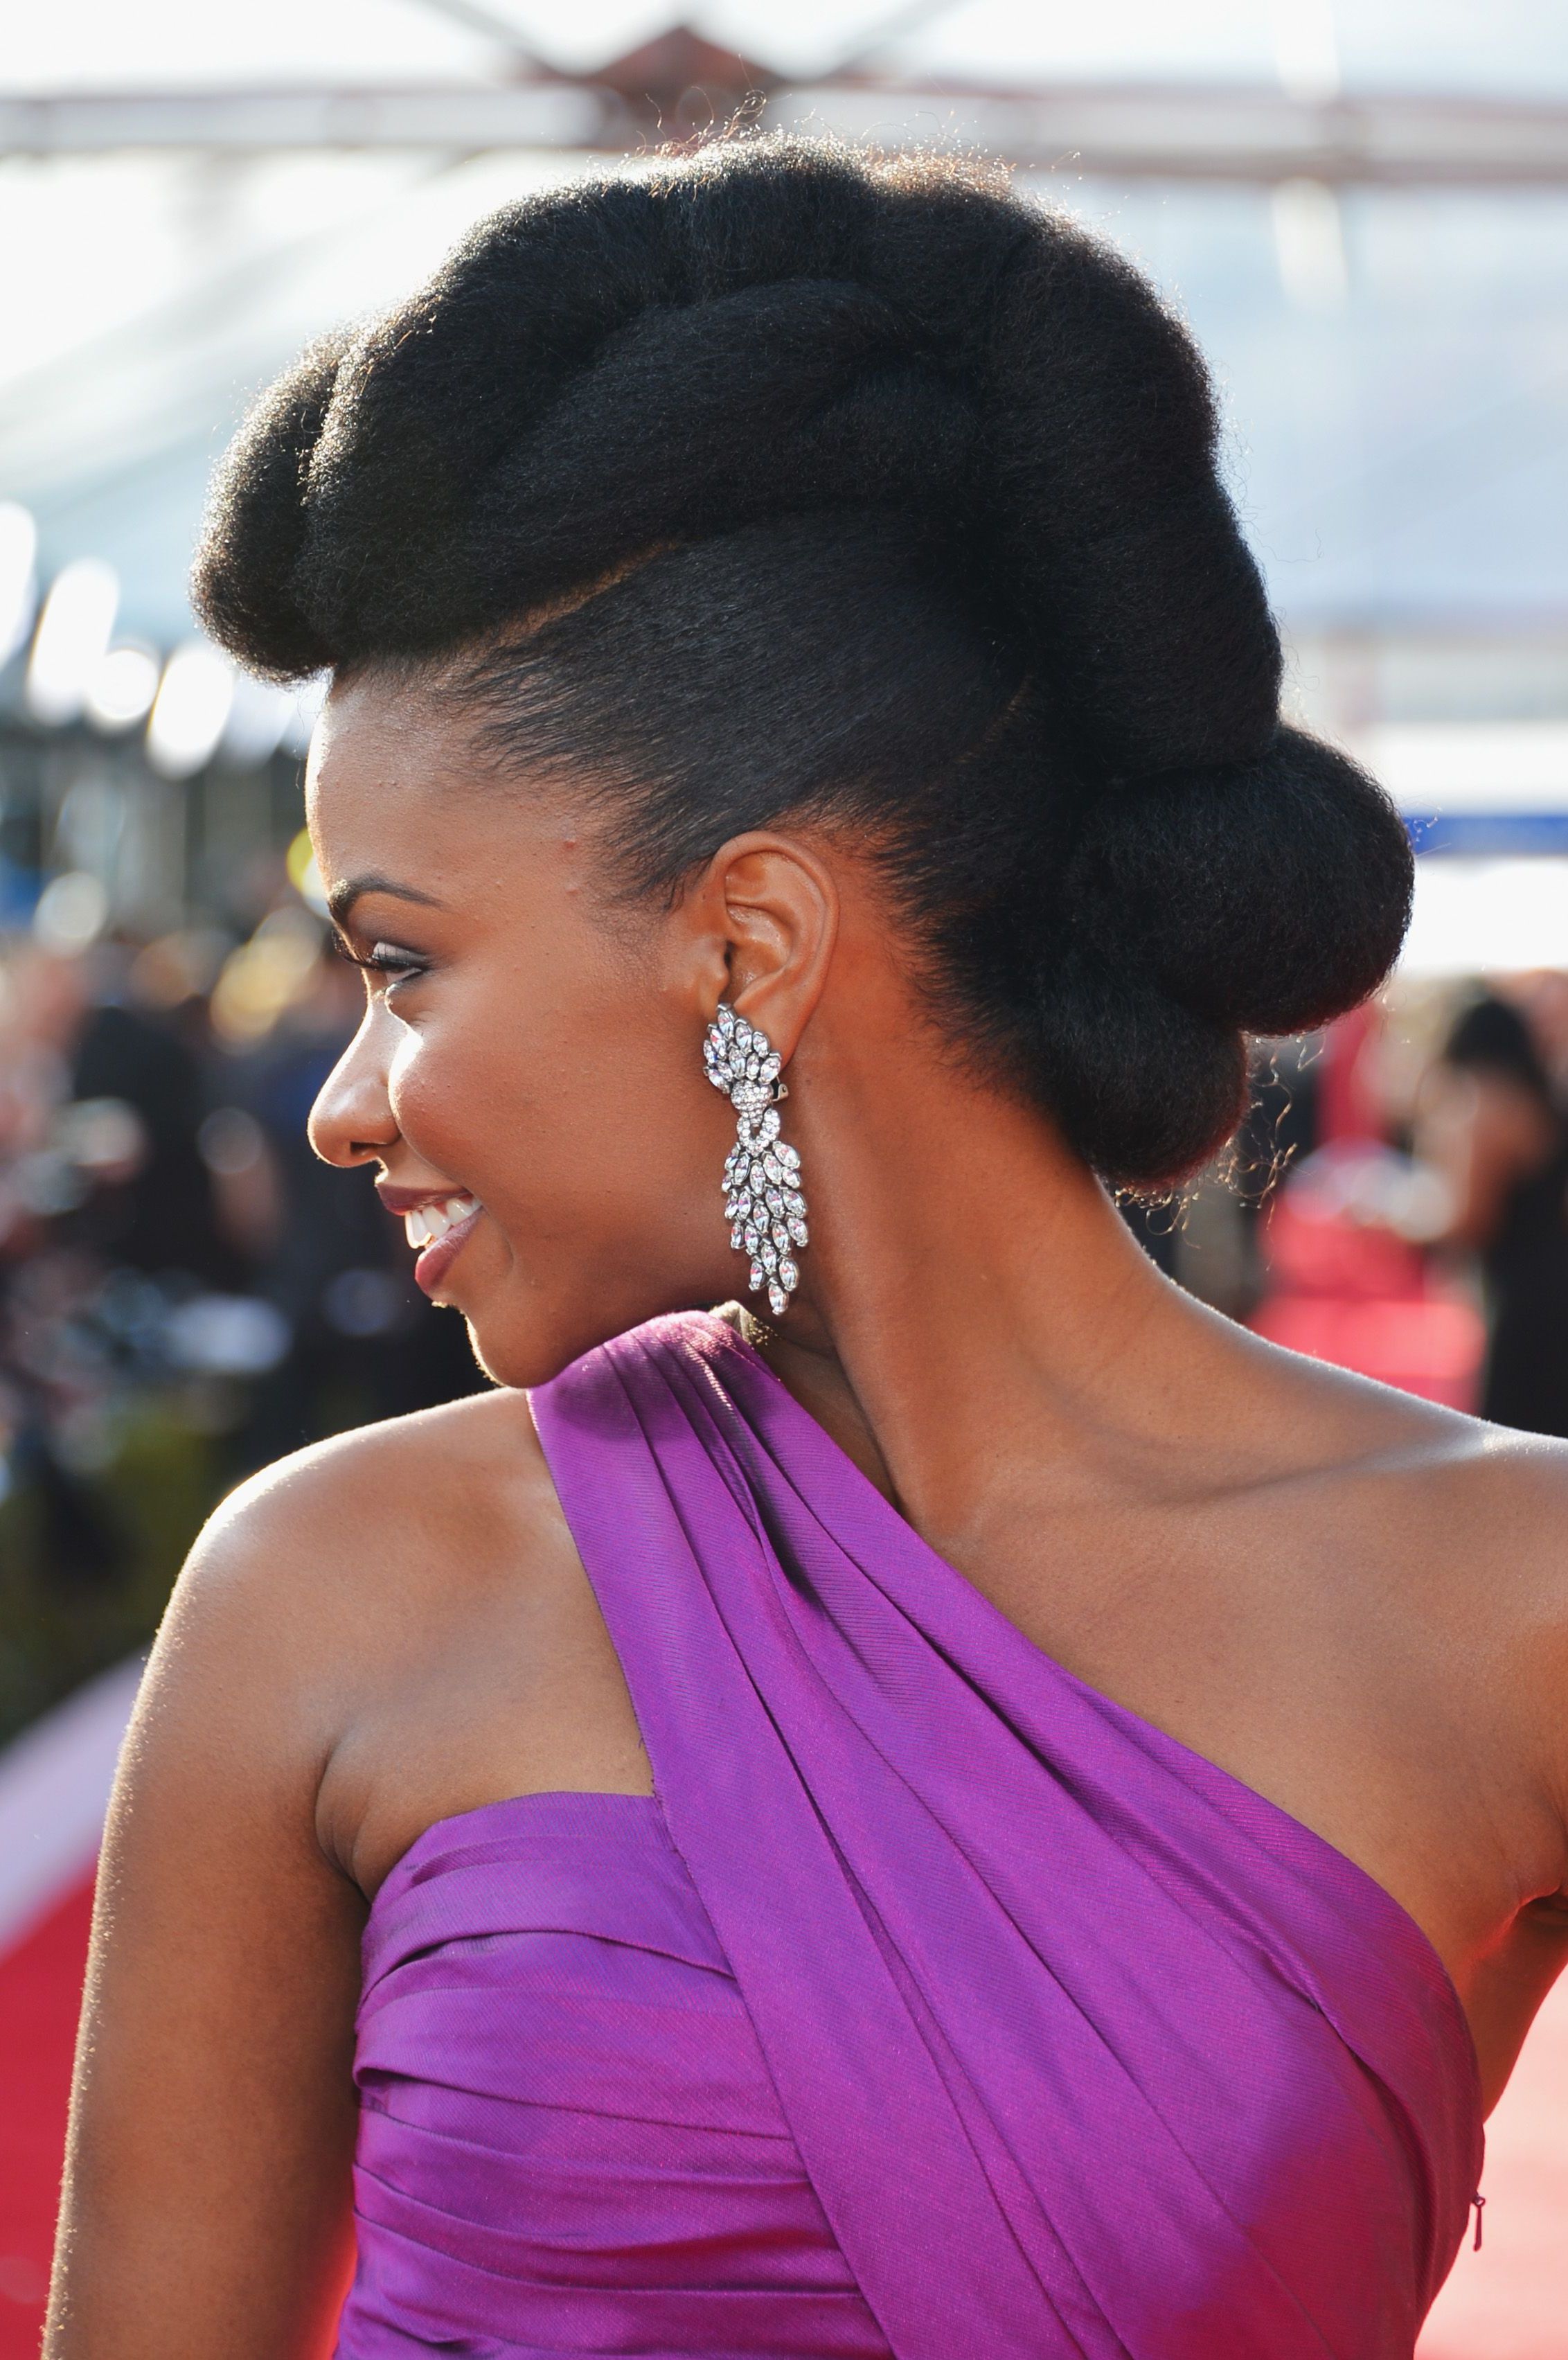 Popular Medium Haircuts For Black Women Natural Hair Regarding 30 Easy Natural Hairstyles For Black Women – Short, Medium & Long (Gallery 19 of 20)